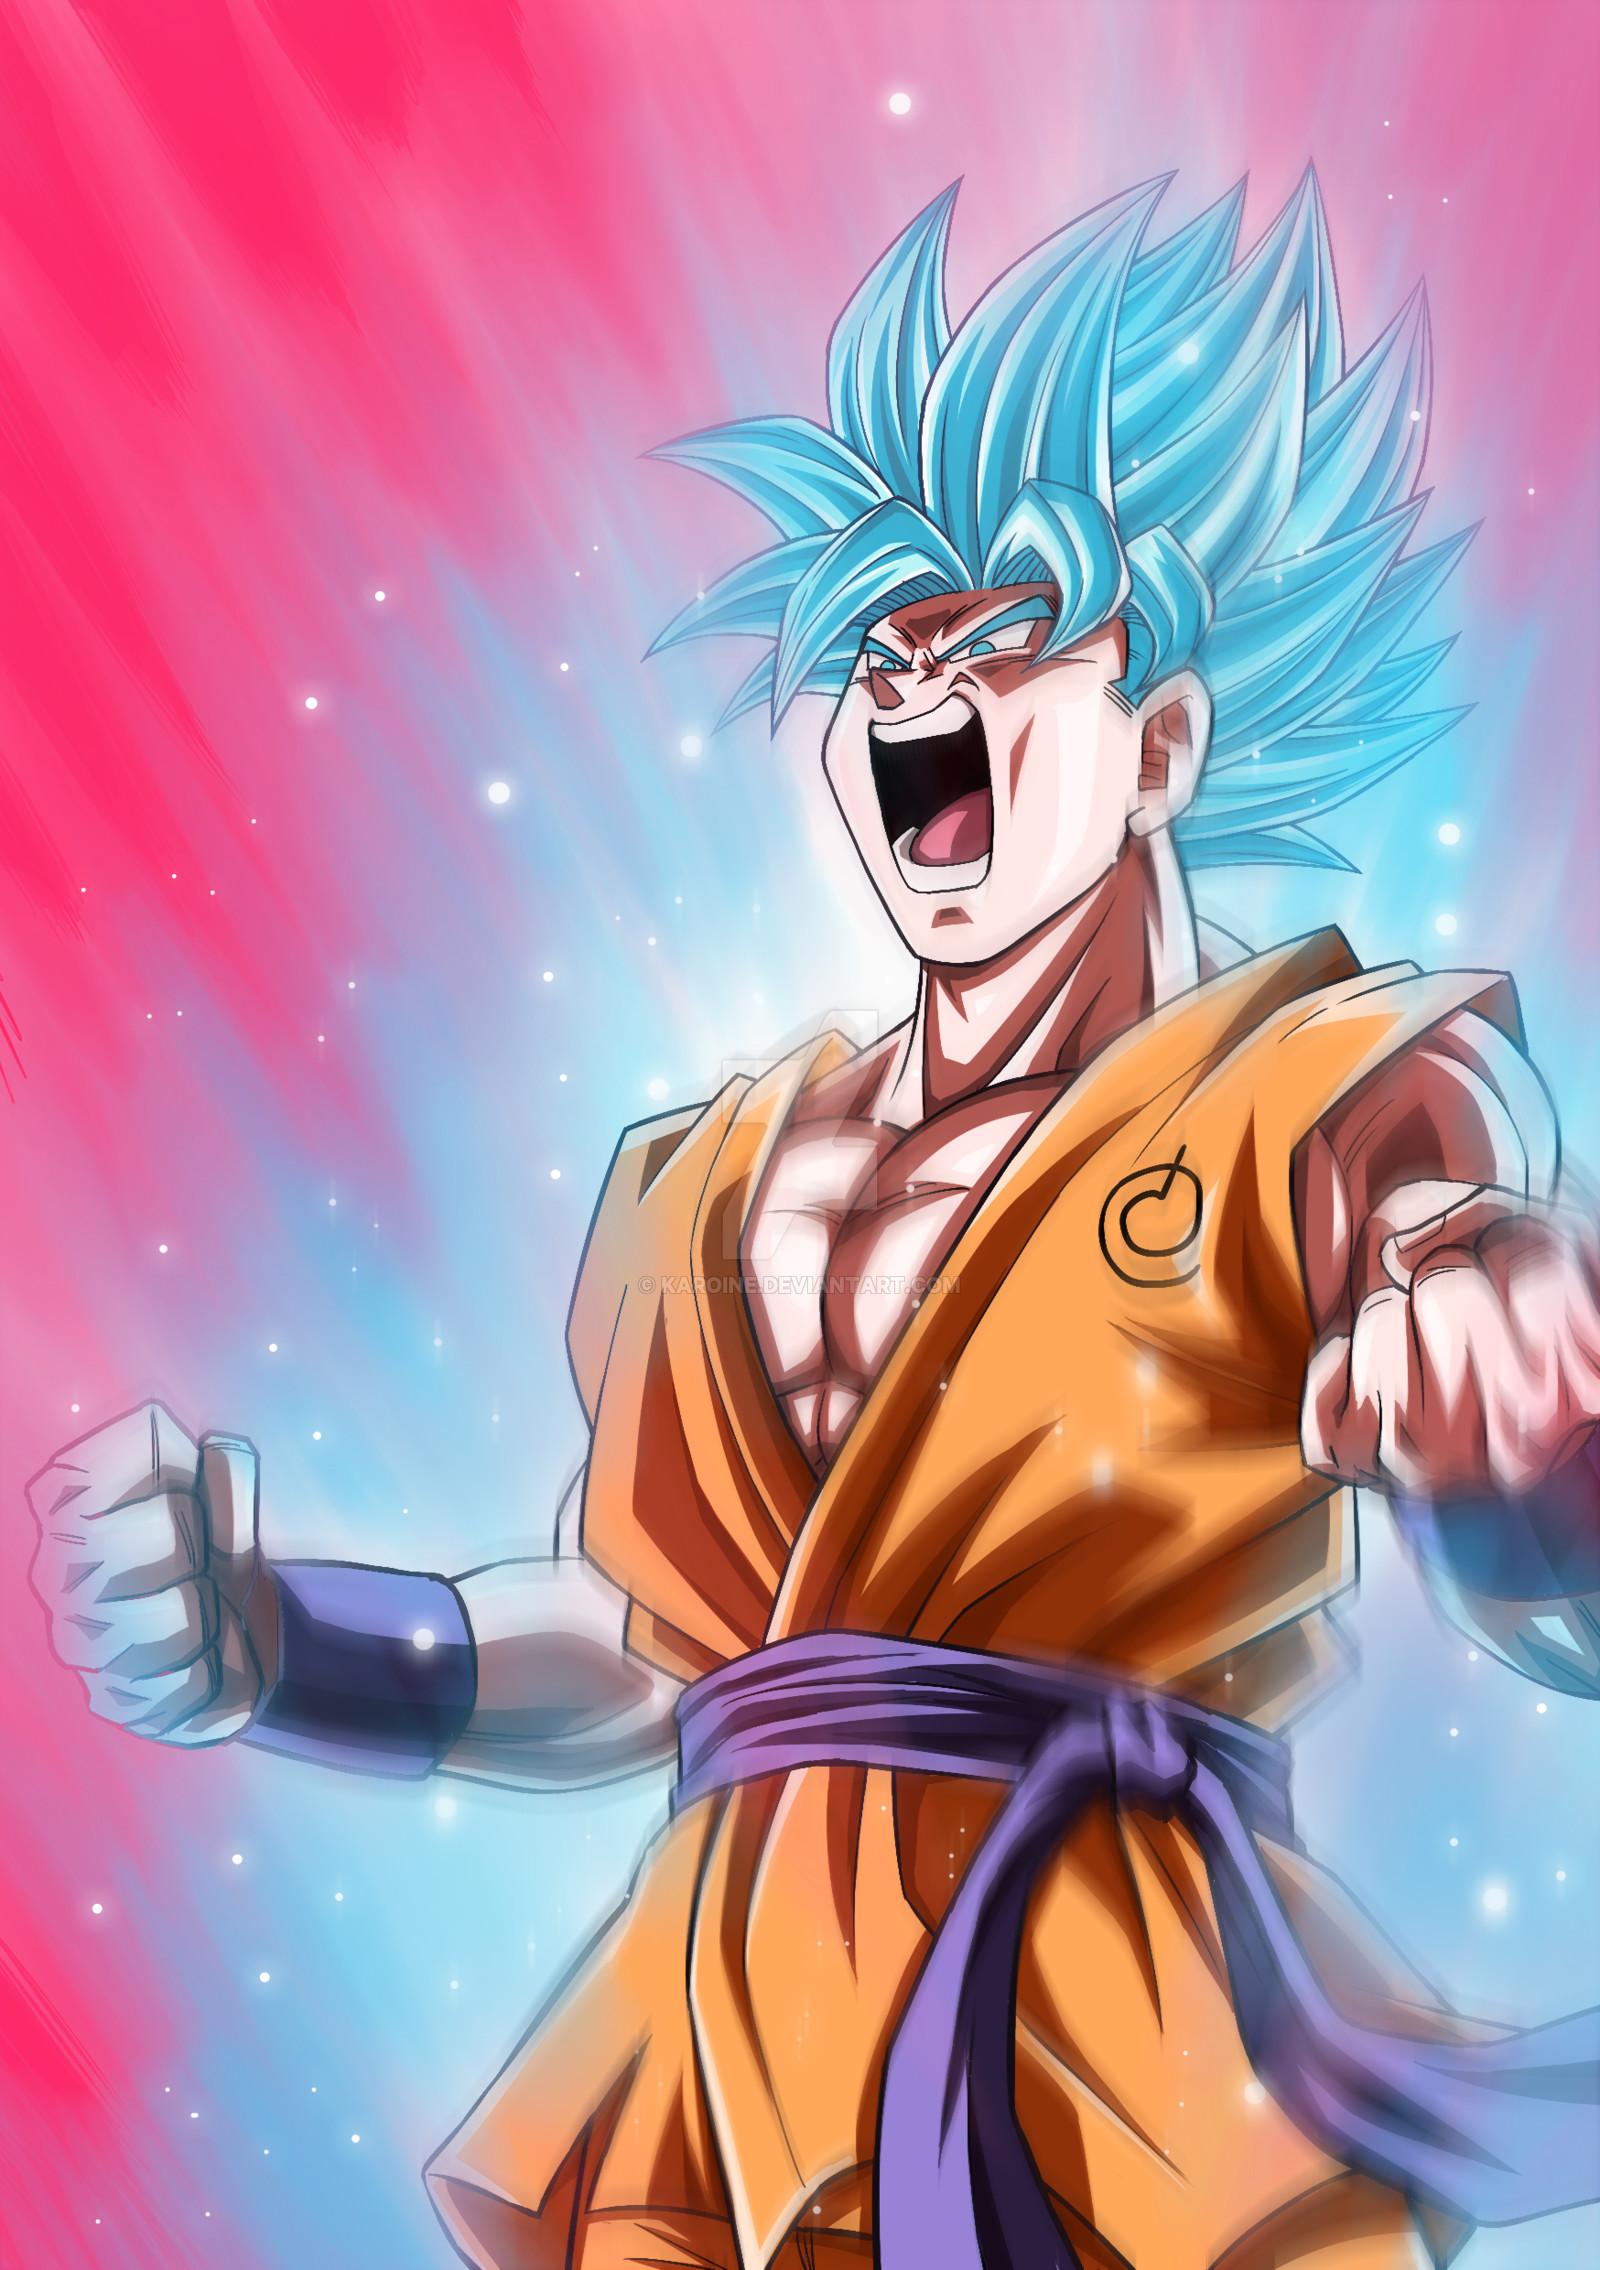 Son Goku Super Saiyan God Super Saiyan Blue by herconaryangga15 on